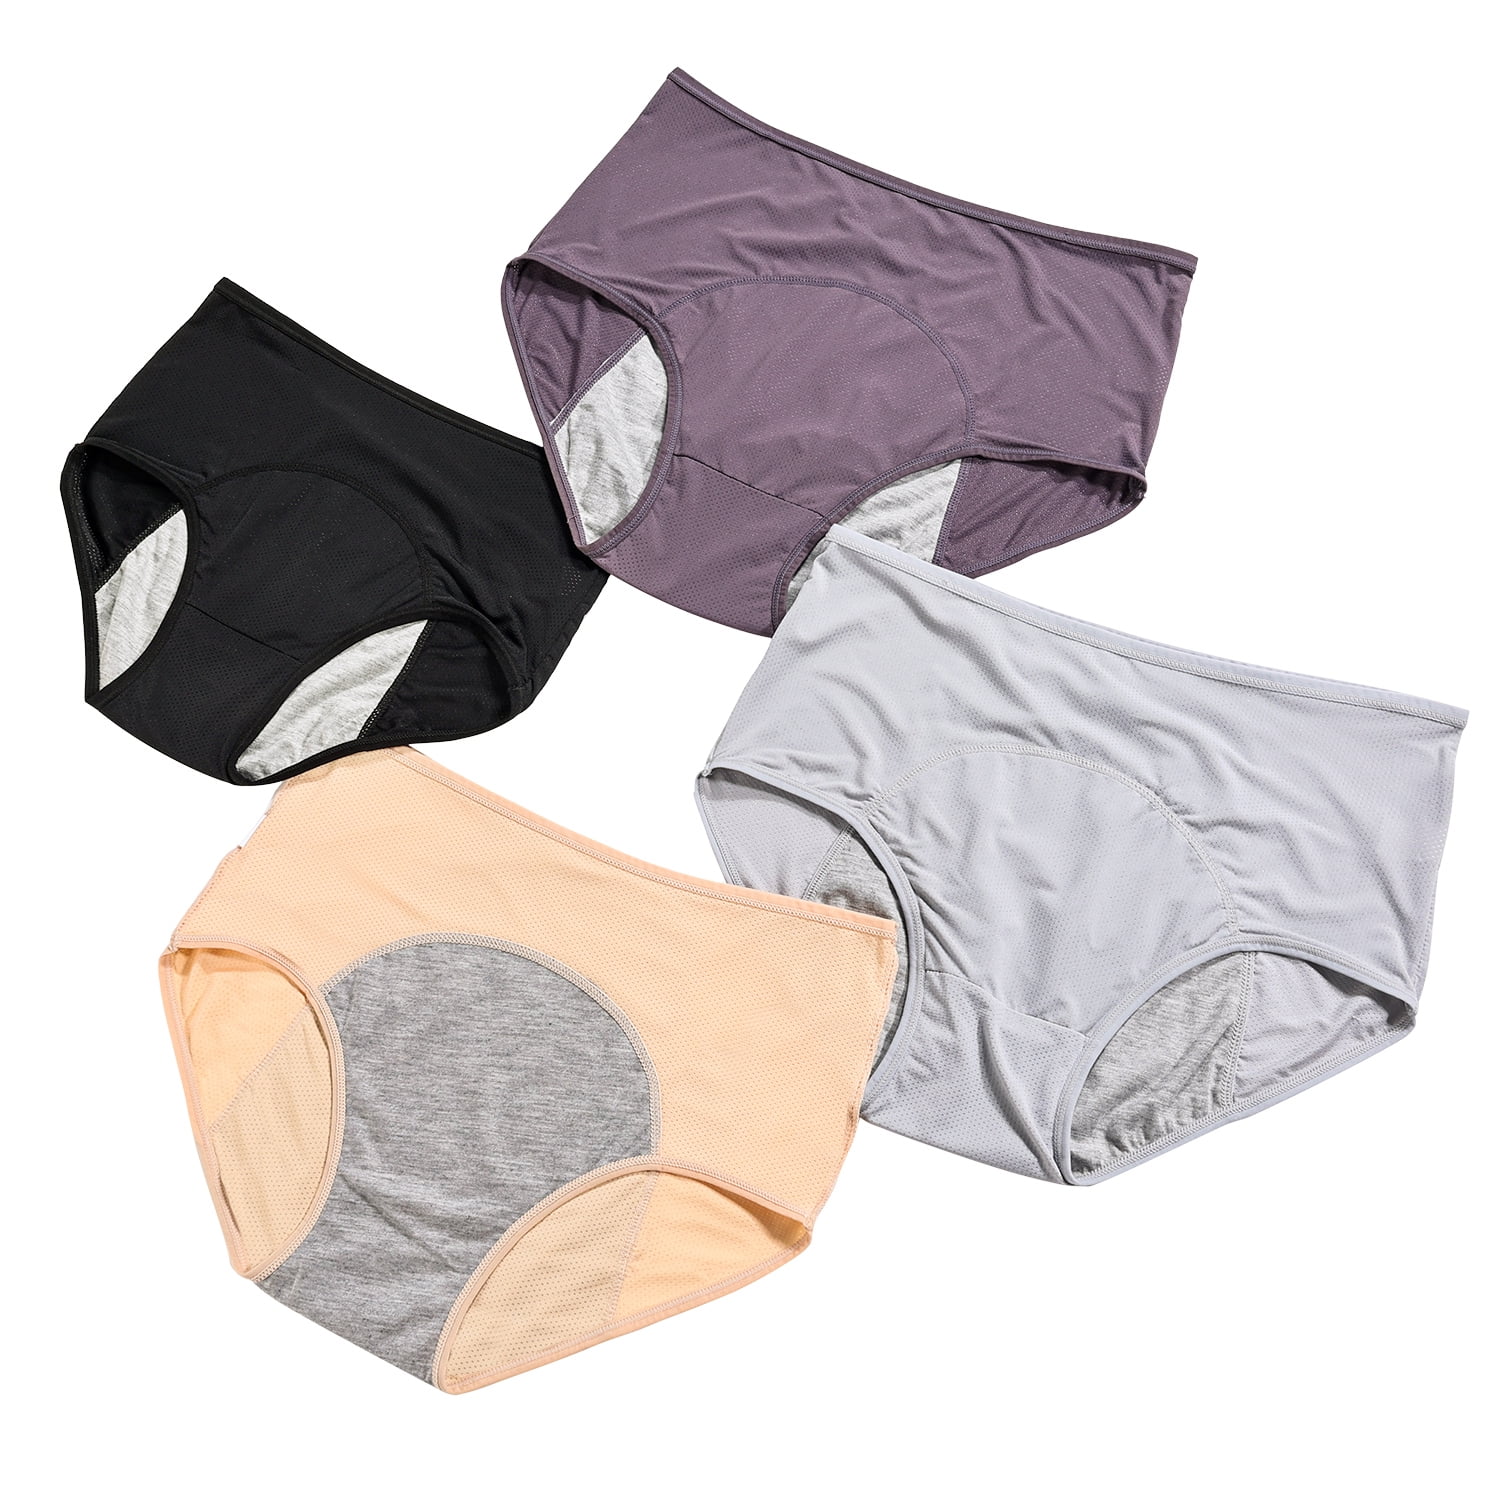 EHTMSAK Period Underwear Heavy Flow Size Small Womens Low Weist Menstrual  Protective Leak Proof Briefs for Teen Girls,women 3 Pack Dark Green 3X